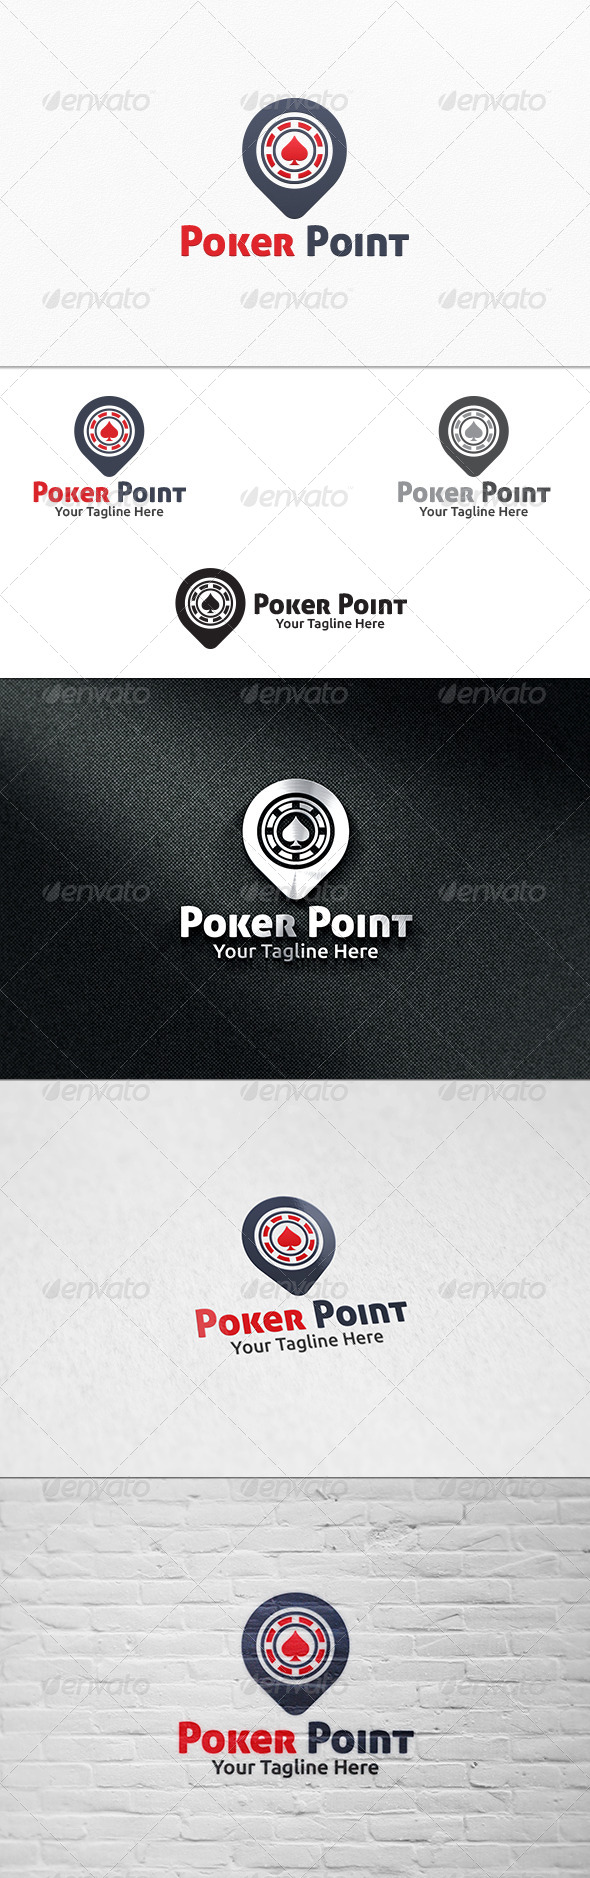 Poker Point - Logo Template